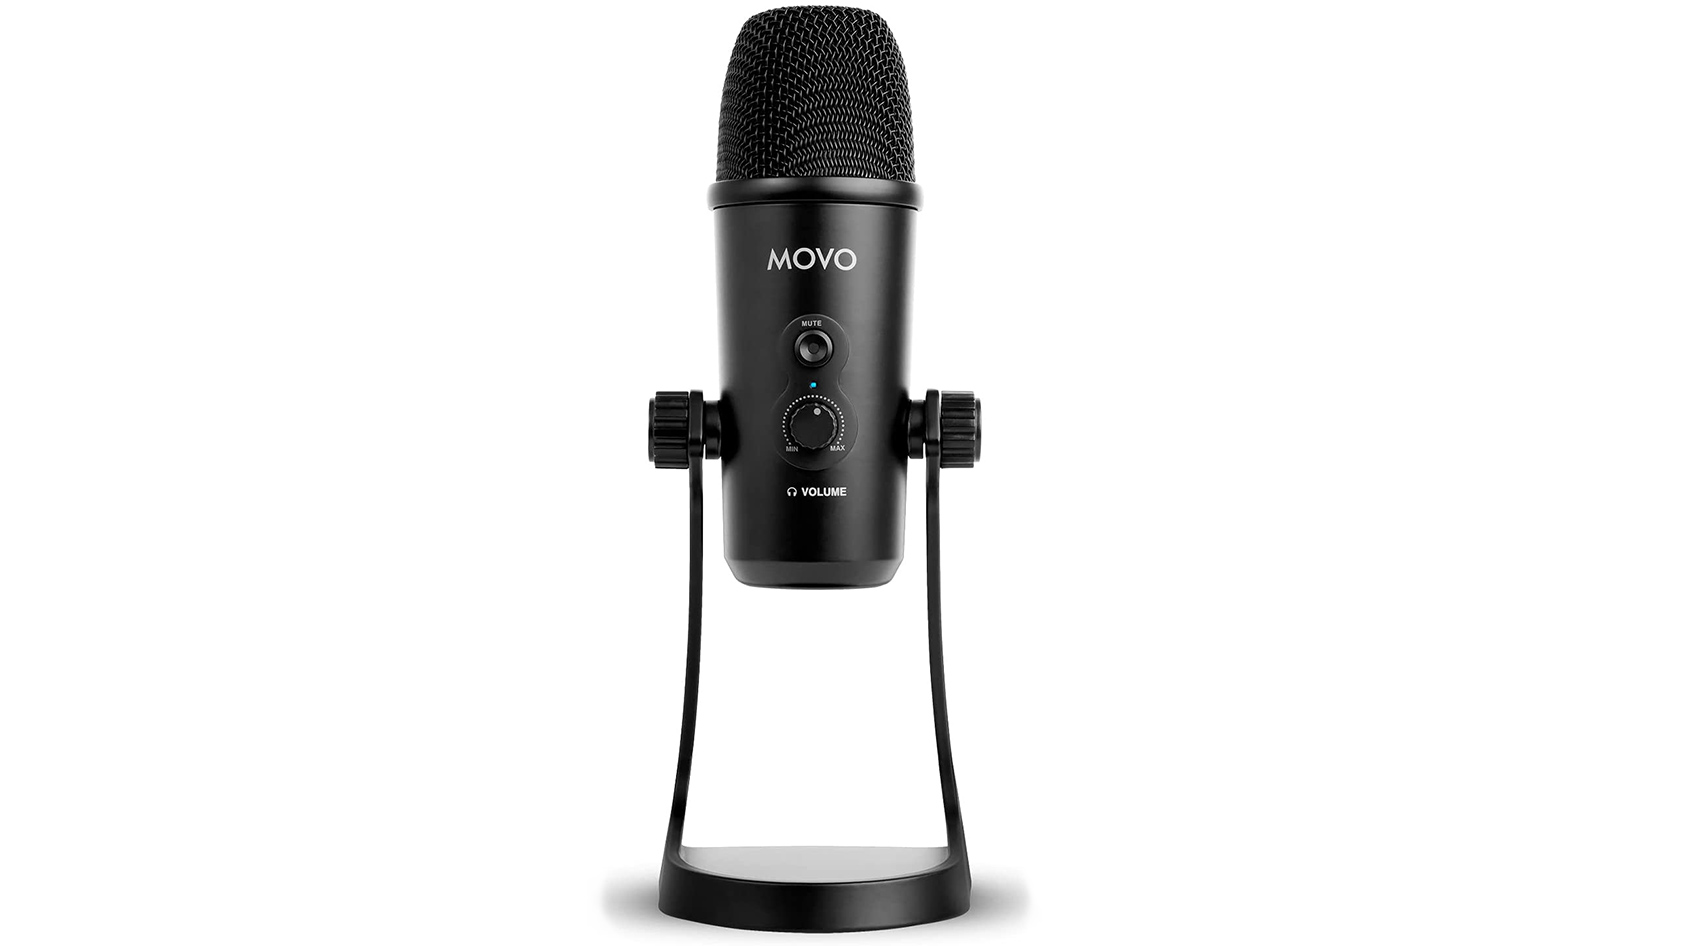 Logitech Blue Sona Microphone: No Mic Booster? No Worries!